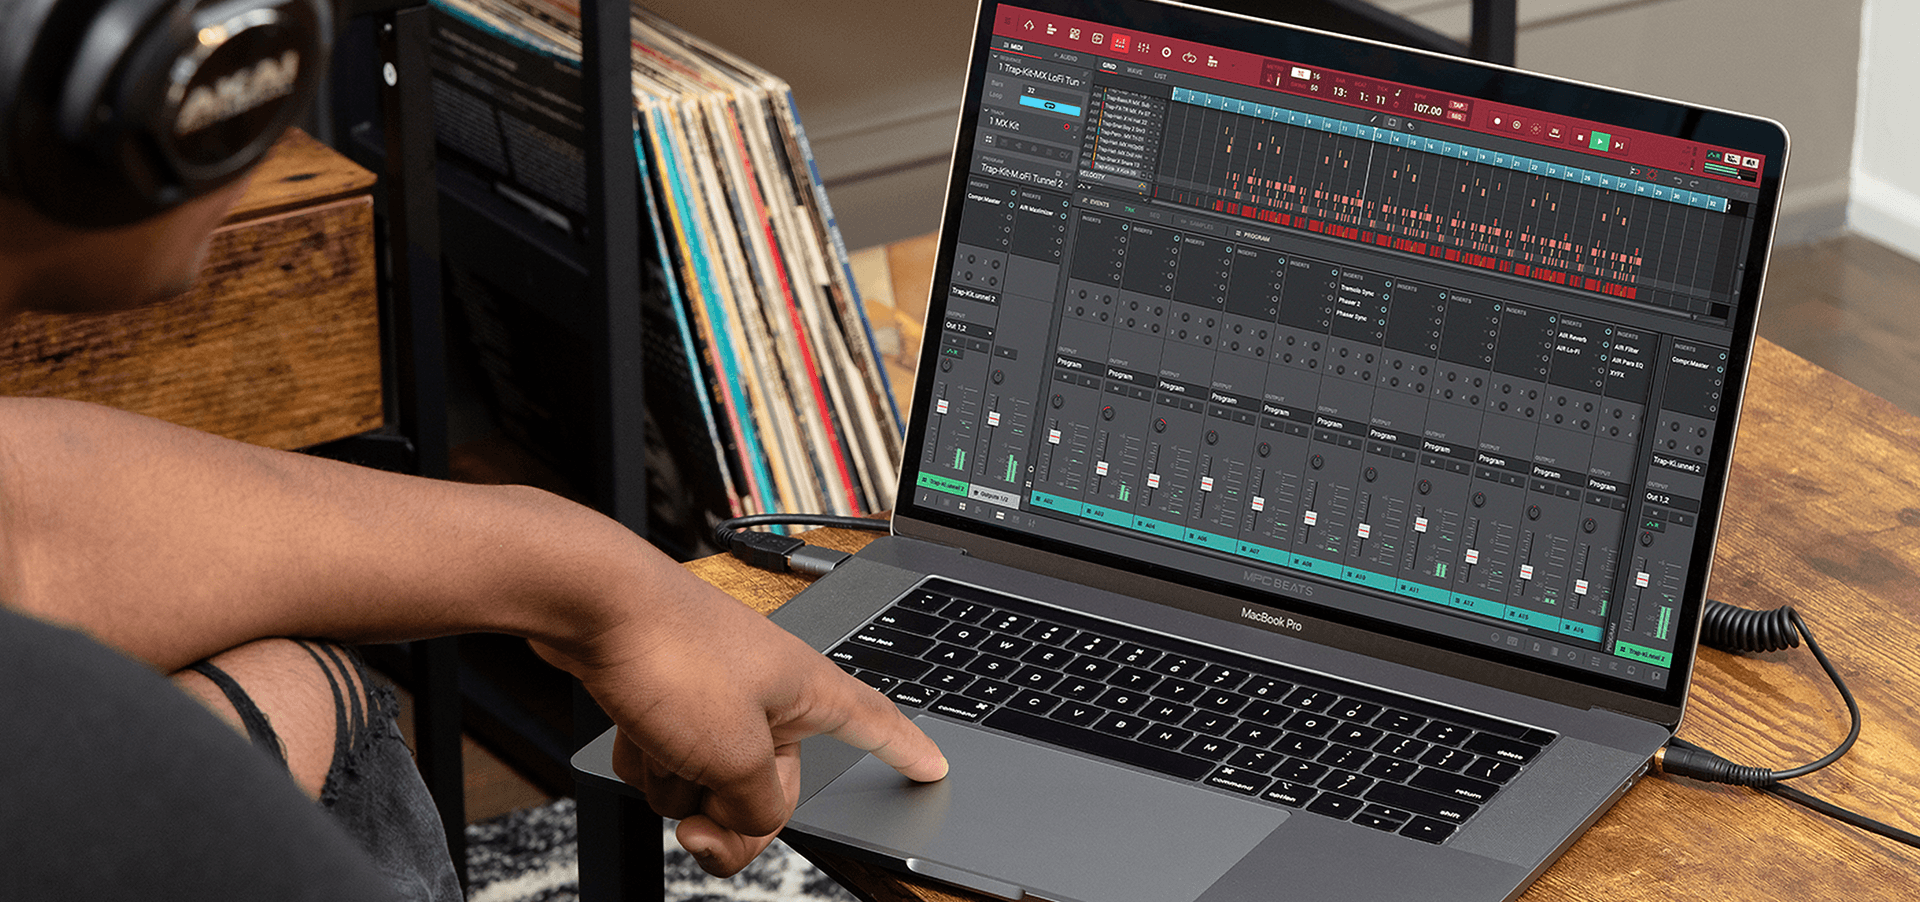 Akai Launches New FREE 'MPC Beats' Music-Making Software